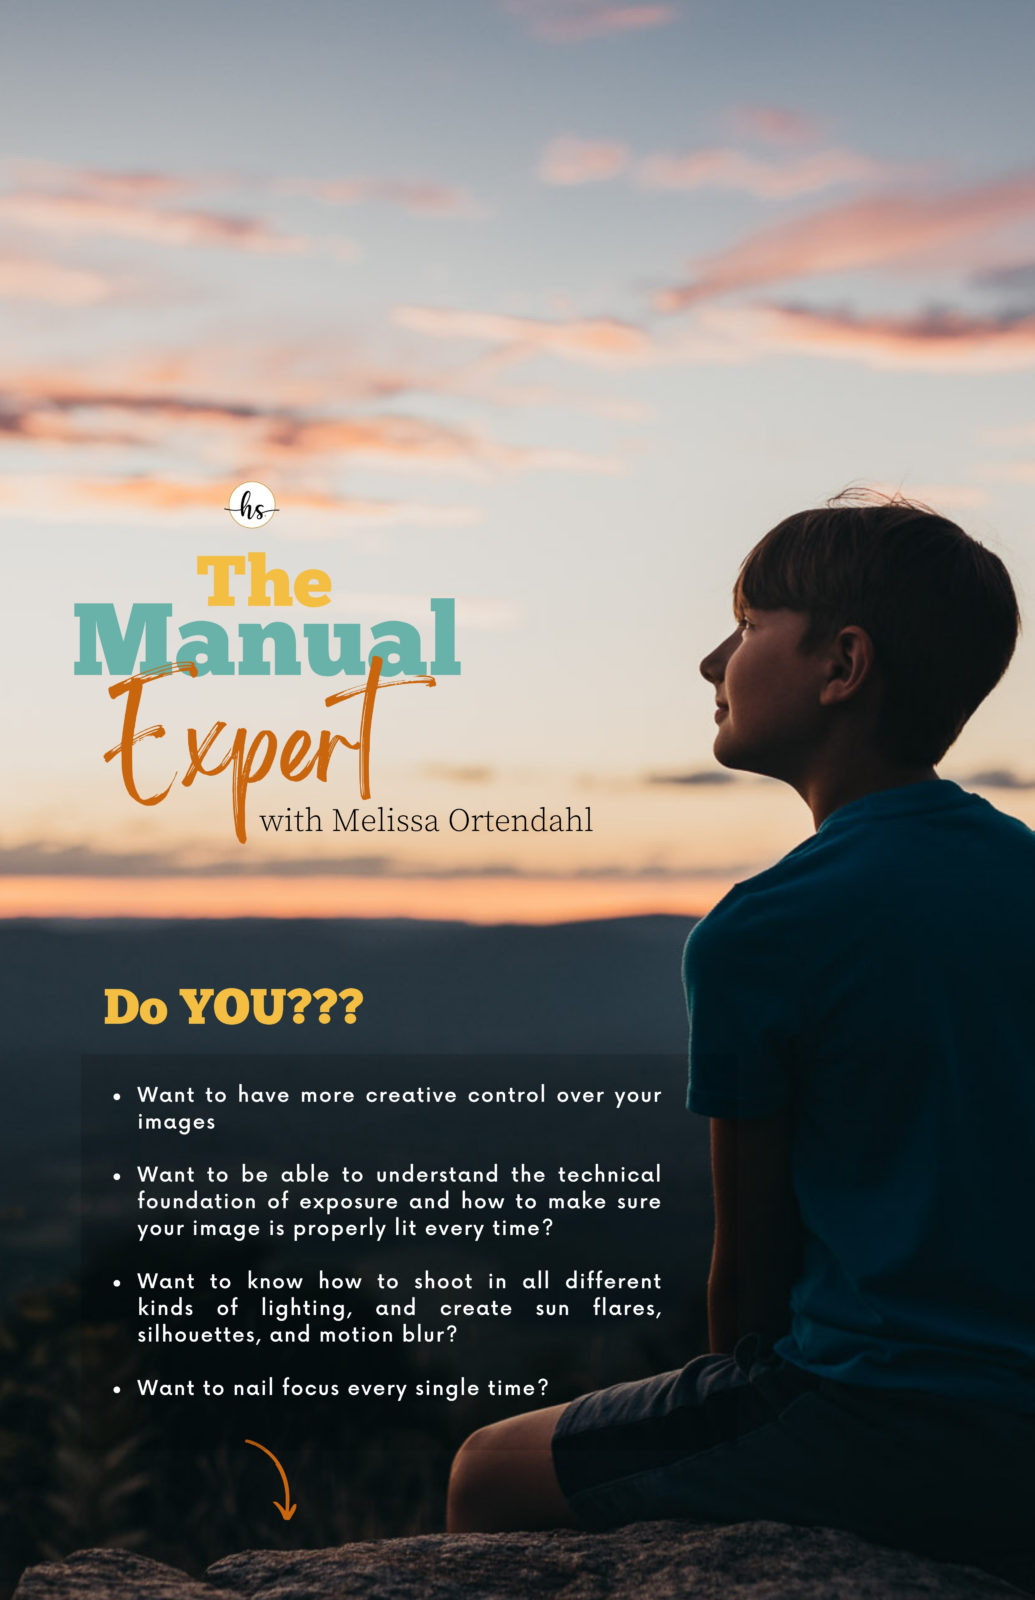 The Manual Expert with Melissa Ortendahl Do you